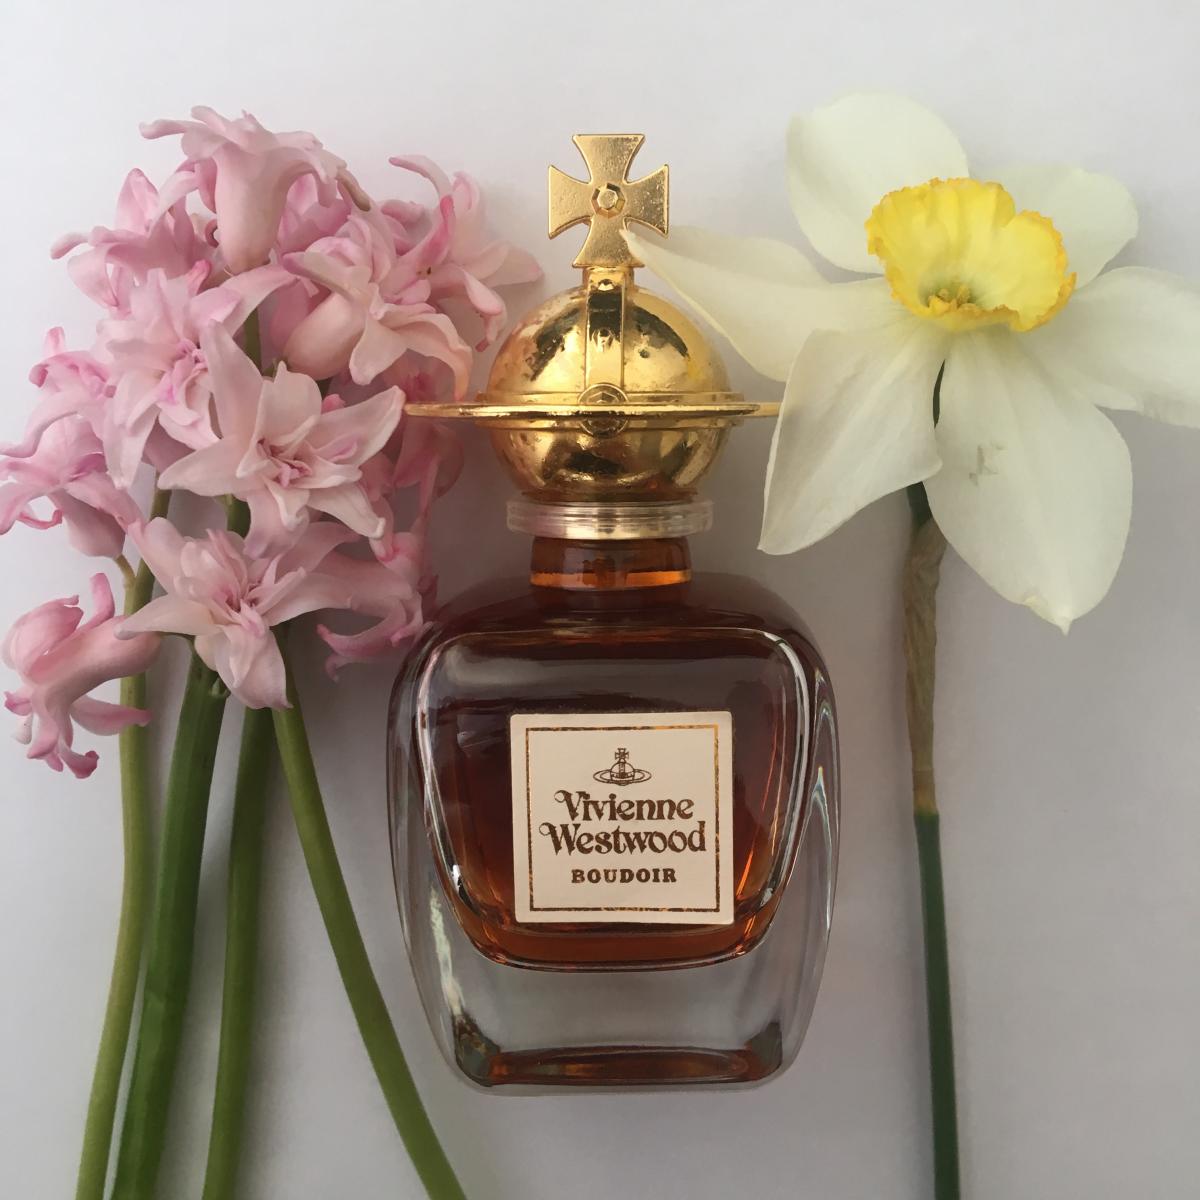 Boudoir Vivienne Westwood perfume - a fragrance for women 1998